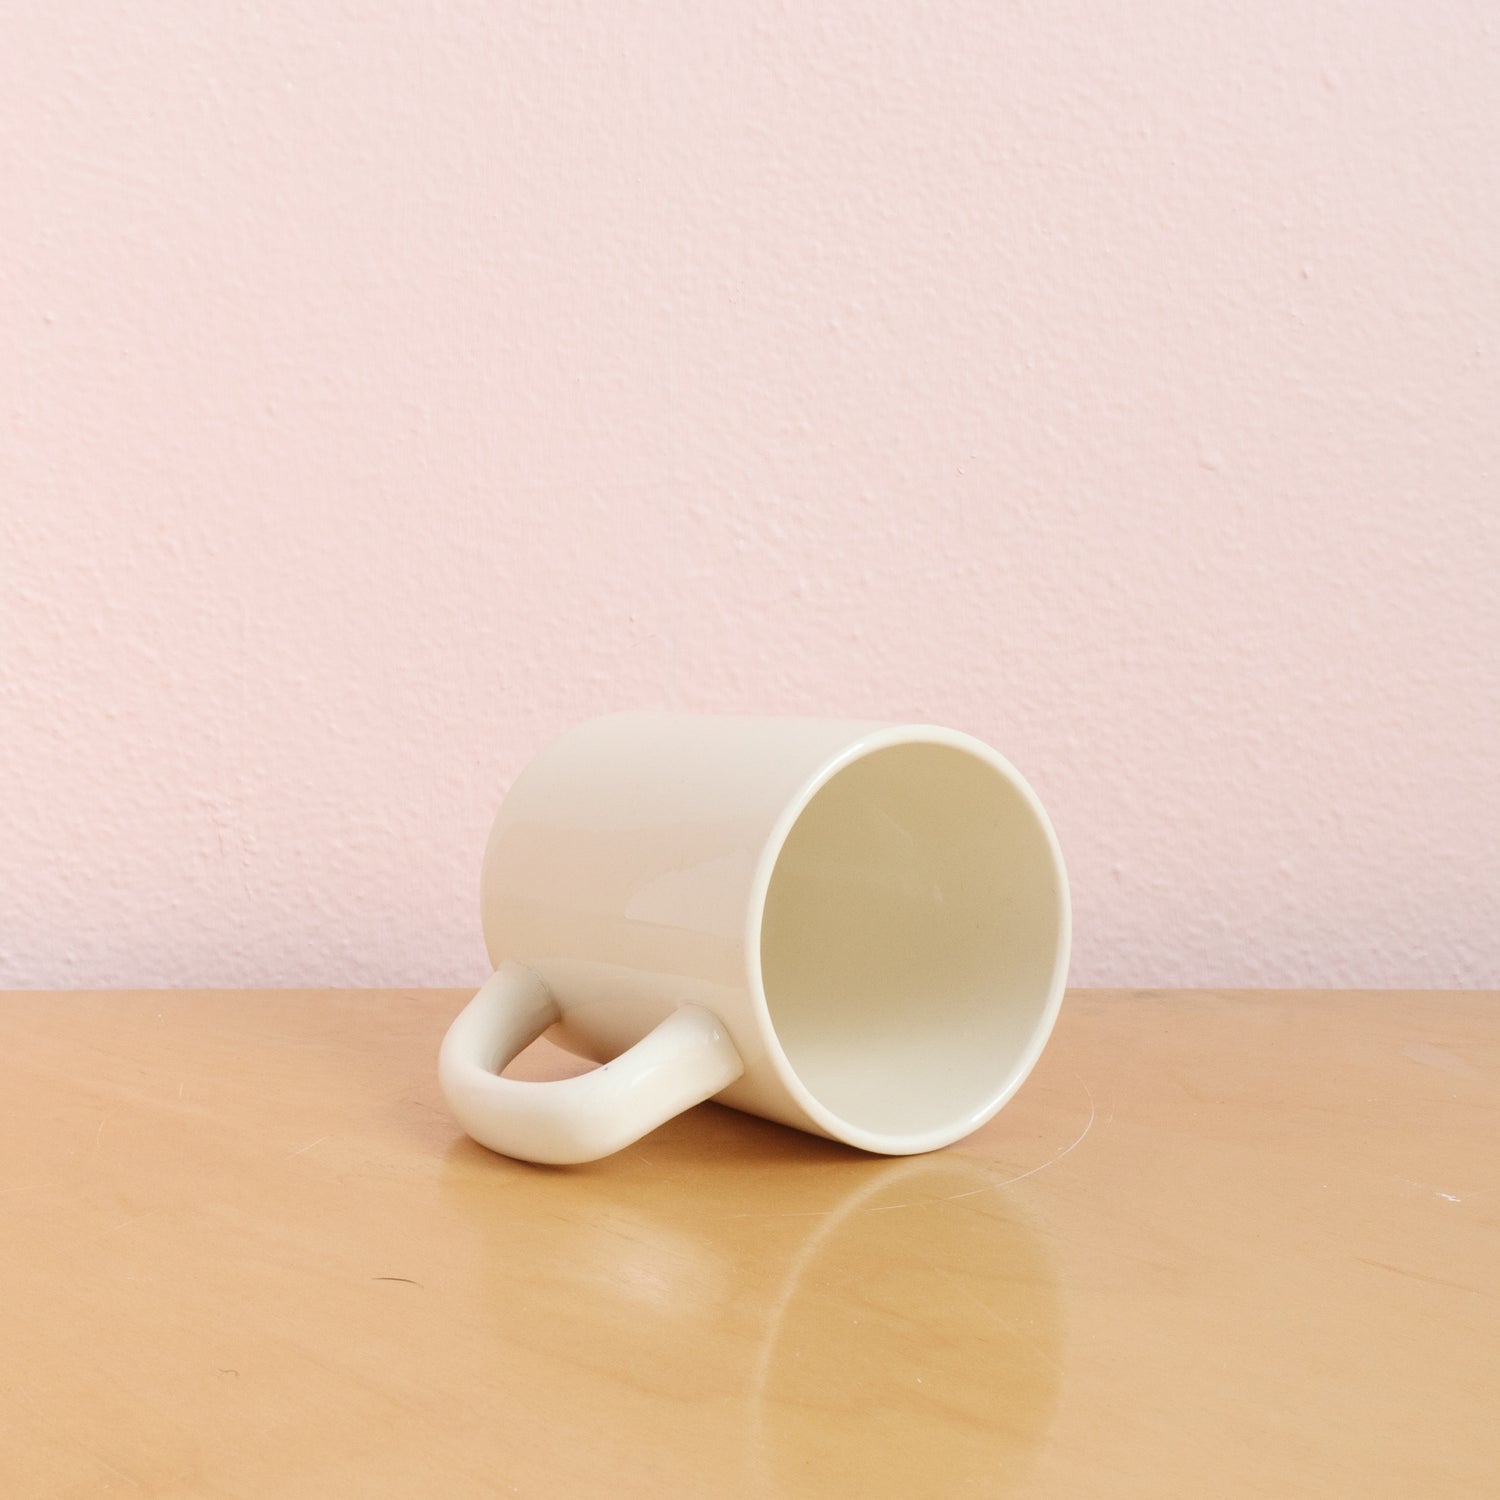 Vintage heavy ceramic restaurant grade coffee mug